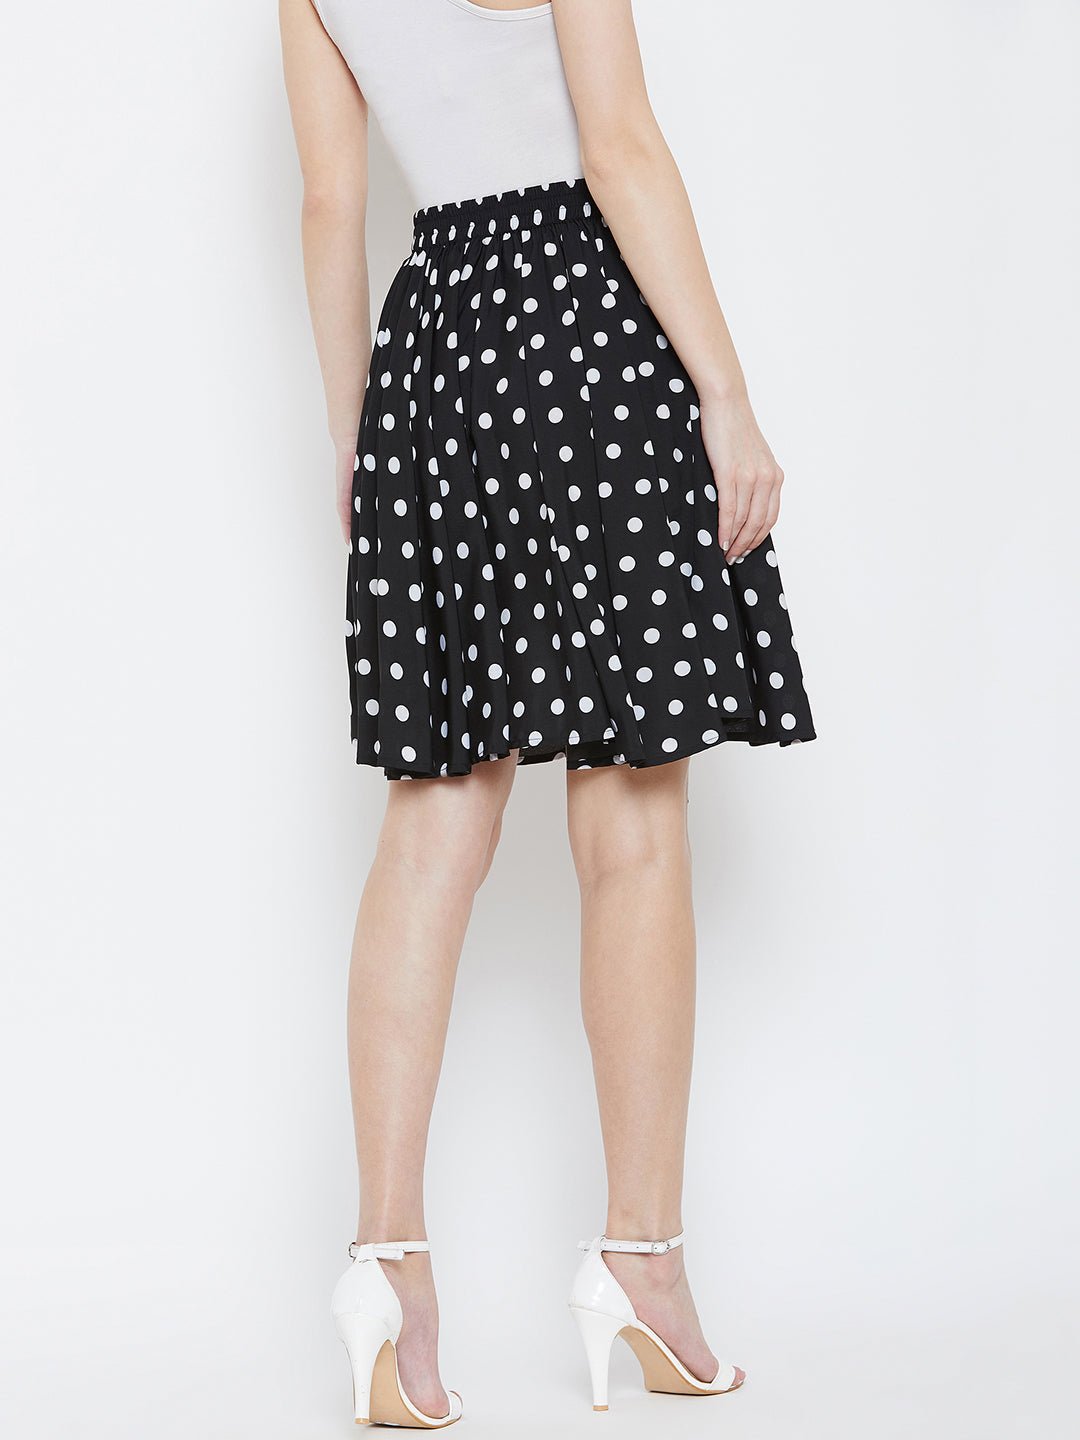 Folk Republic Women Black & White Polka Dot Printed Elastic Waist Flared Mini Skirt - #folk republic#